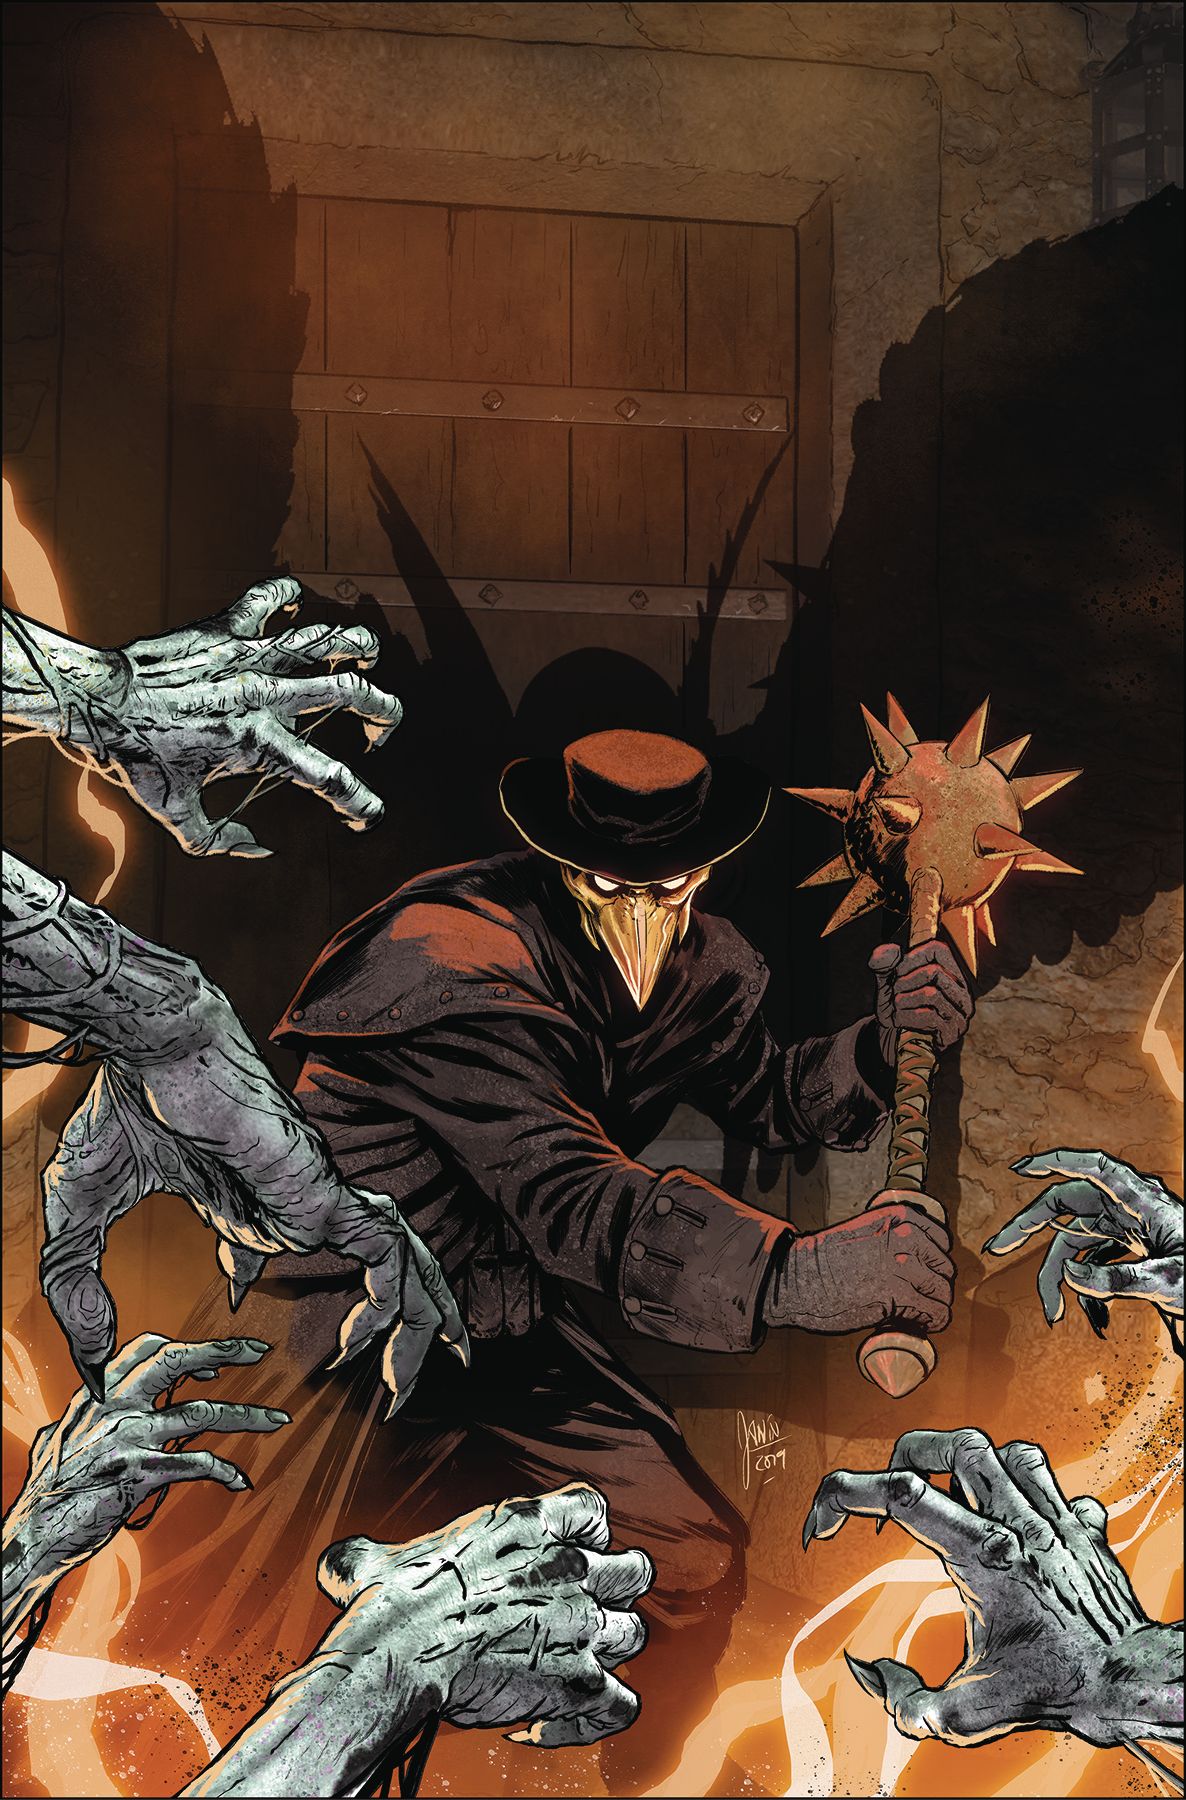 Hawkman #23 Comic